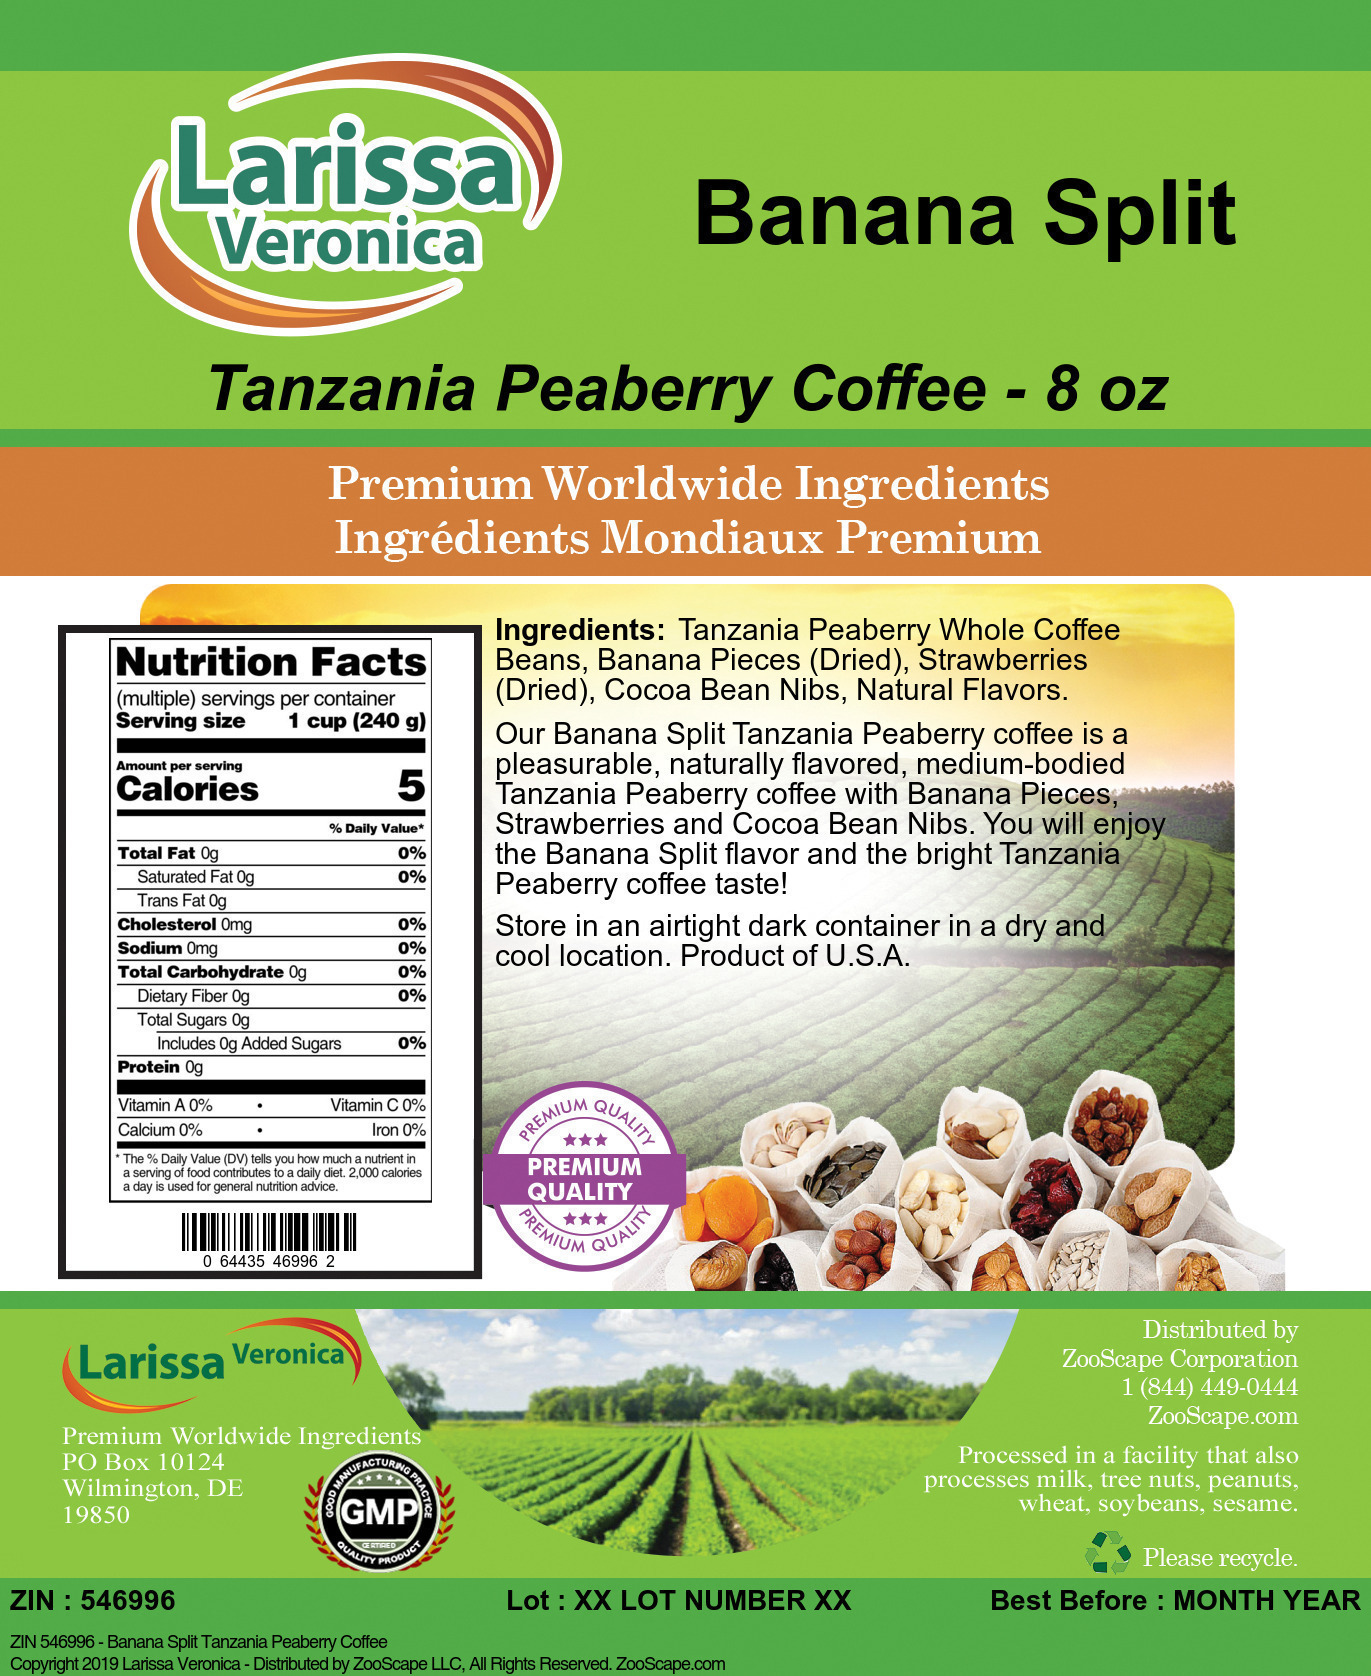 Banana Split Tanzania Peaberry Coffee - Label